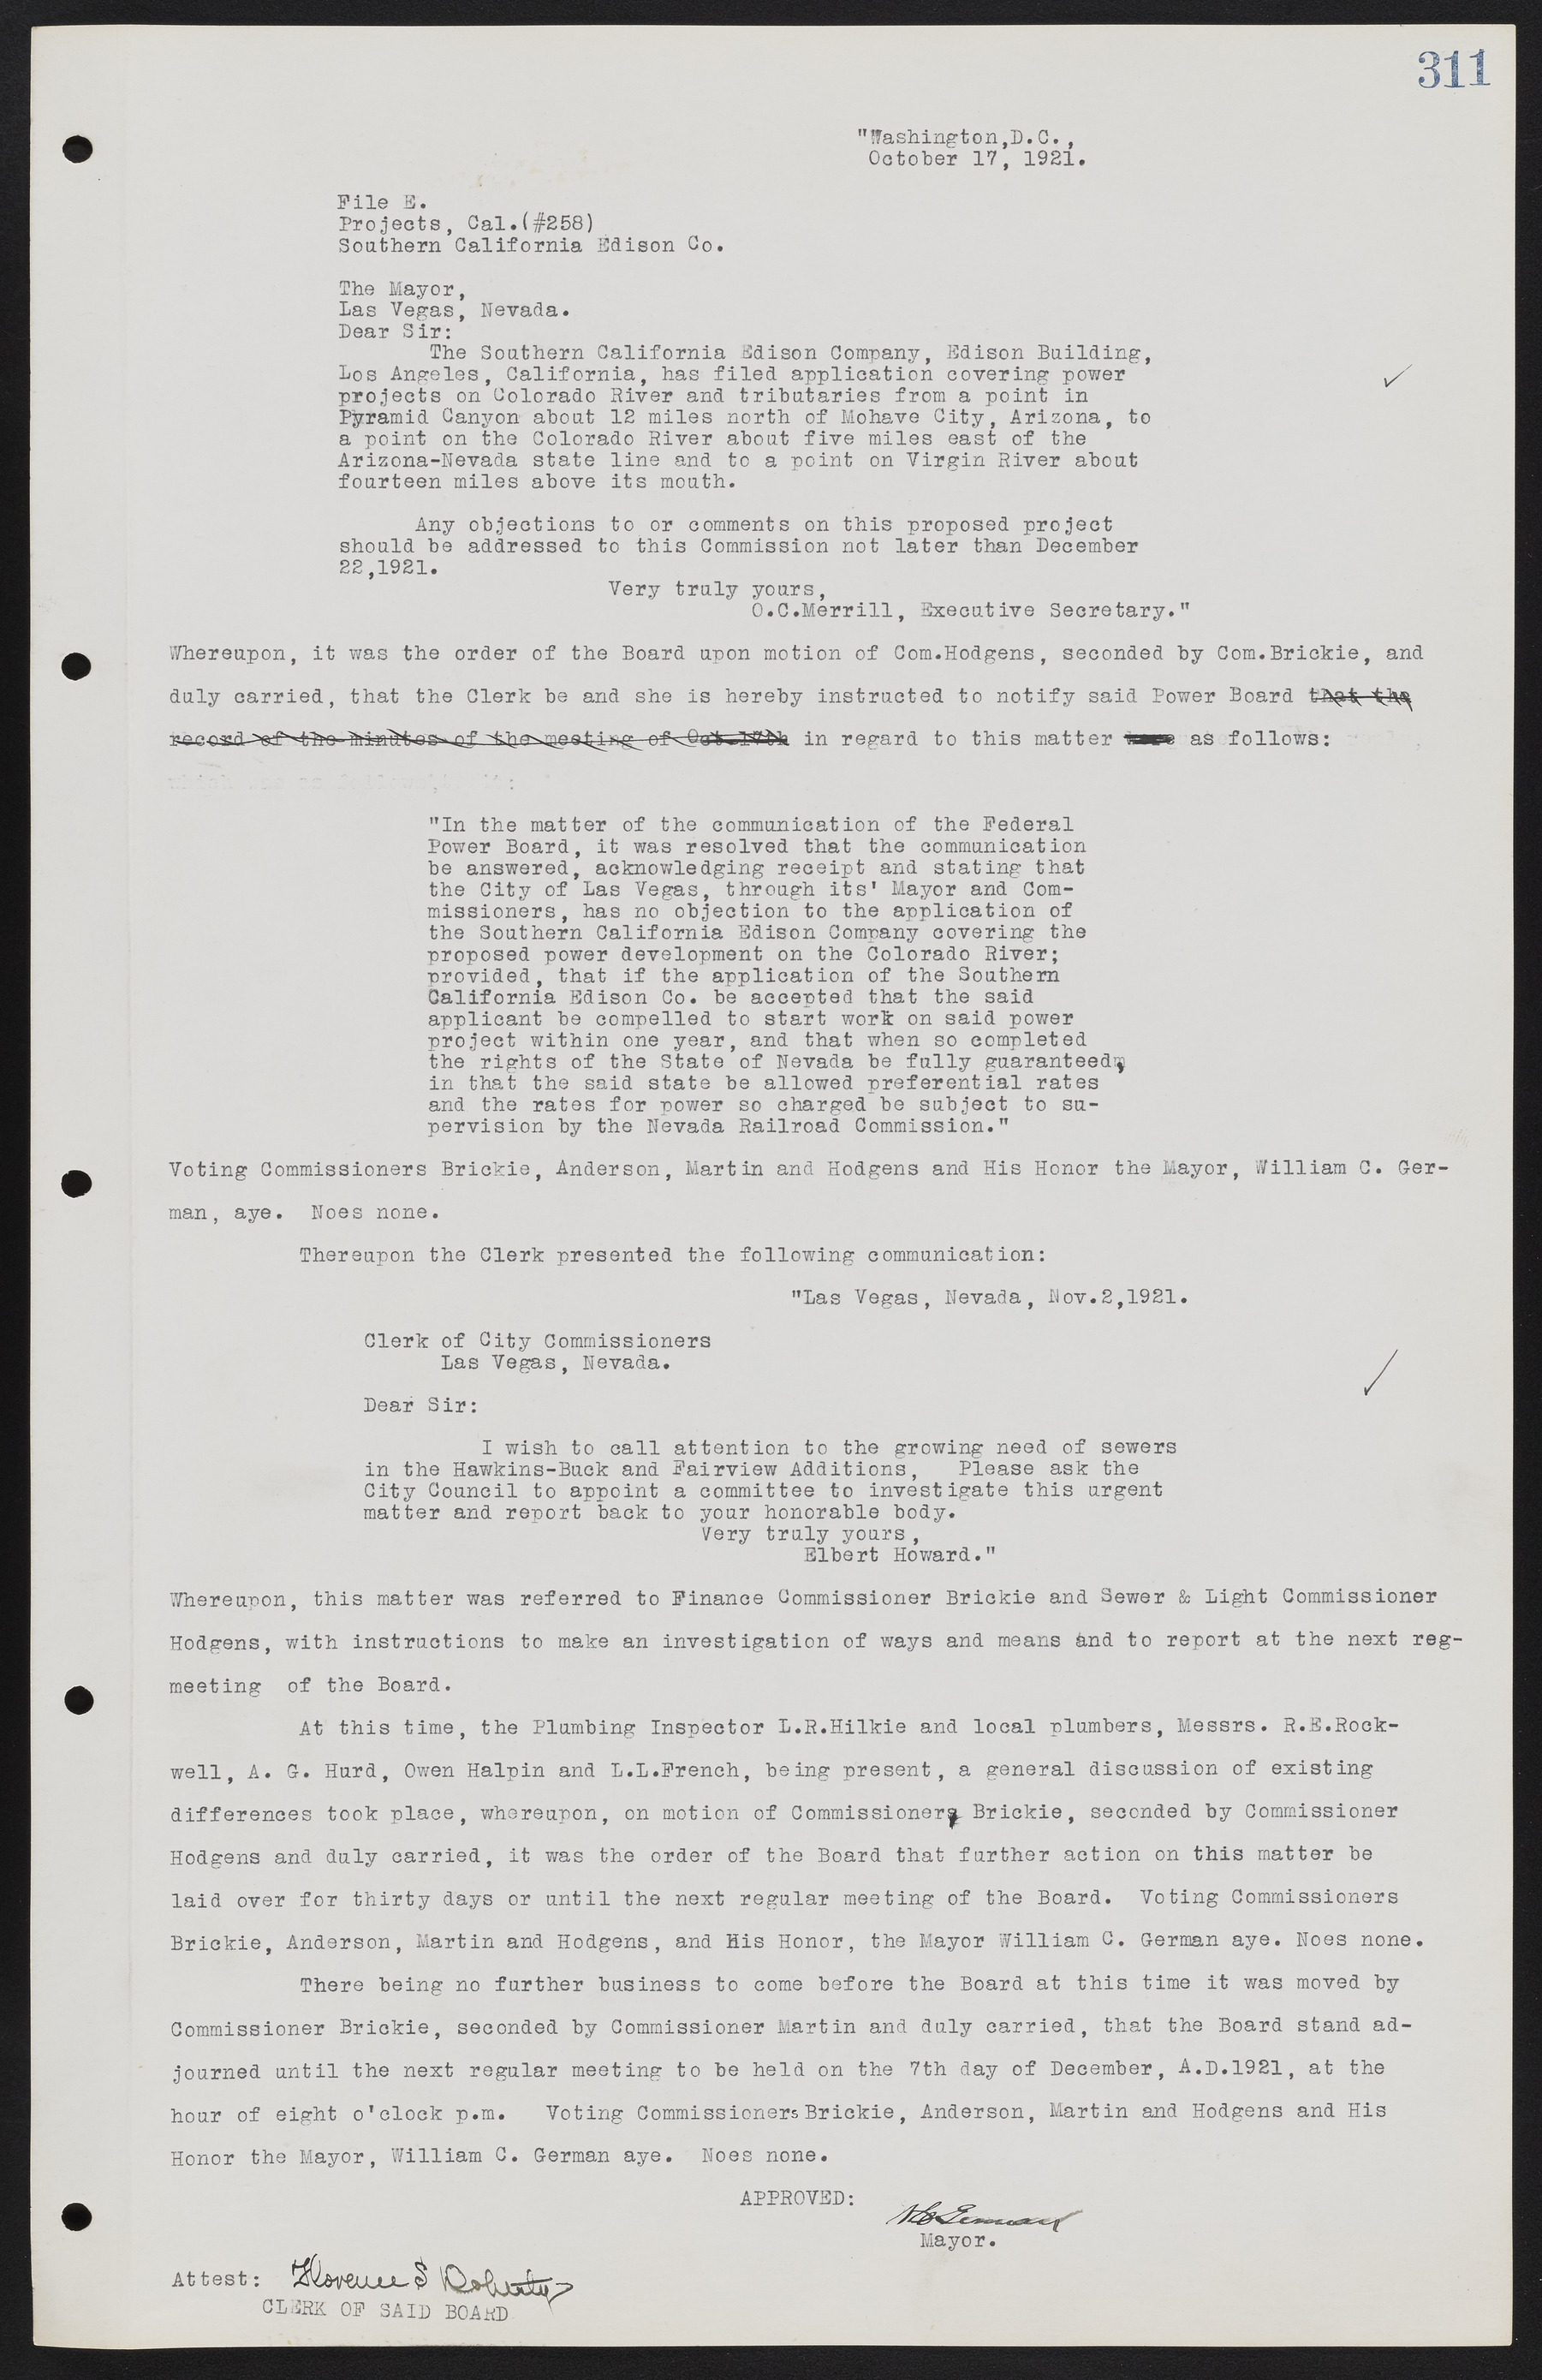 Las Vegas City Commission Minutes, June 22, 1911 to February 7, 1922, lvc000001-327